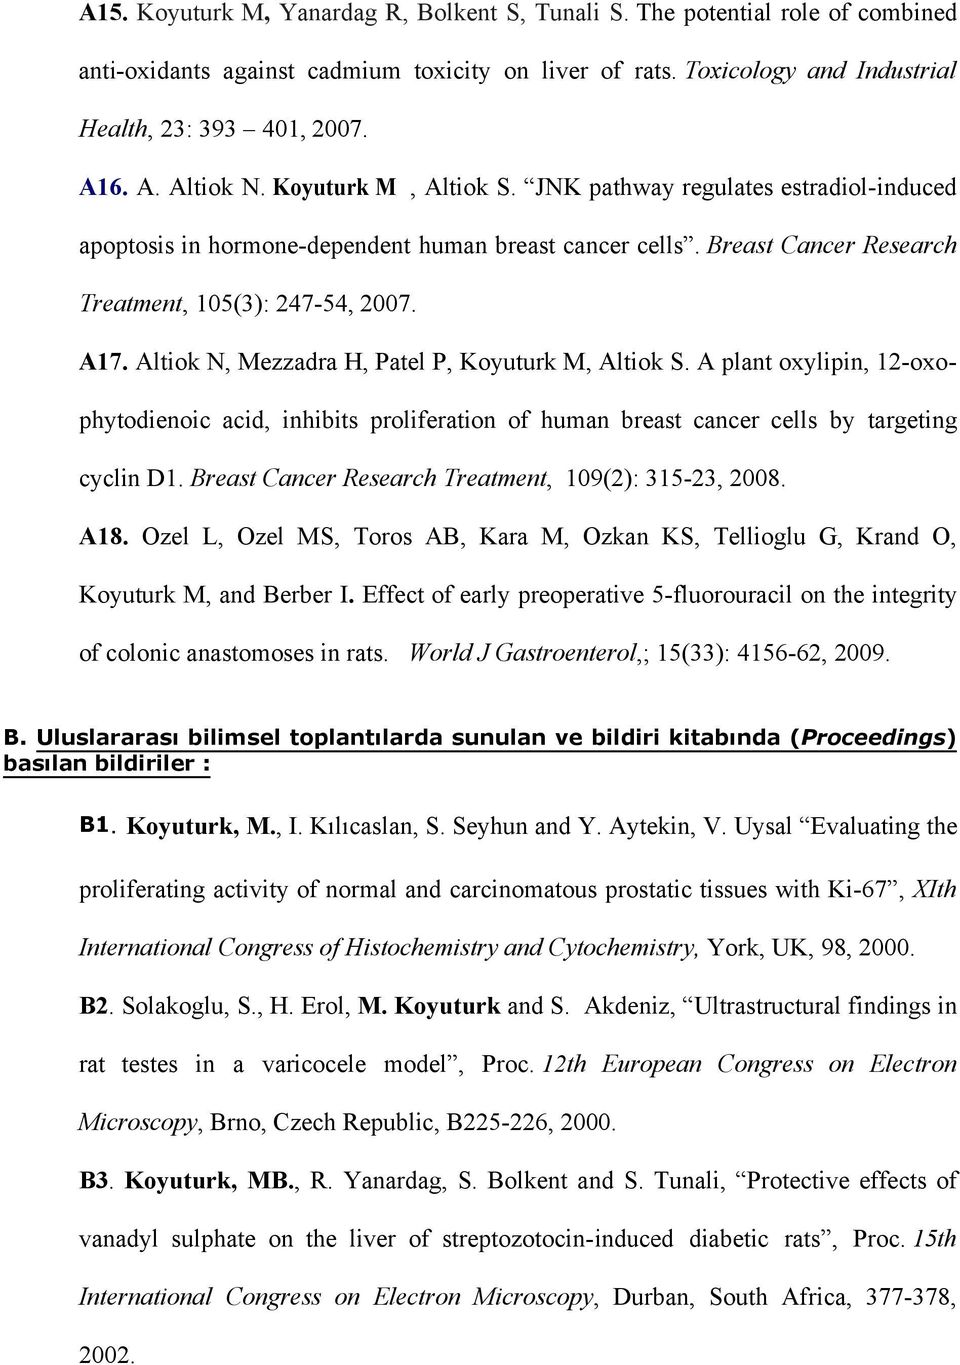 Altiok N, Mezzadra H, Patel P, Koyuturk M, Altiok S. A plant oxylipin, 12-oxophytodienoic acid, inhibits proliferation of human breast cancer cells by targeting cyclin D1.